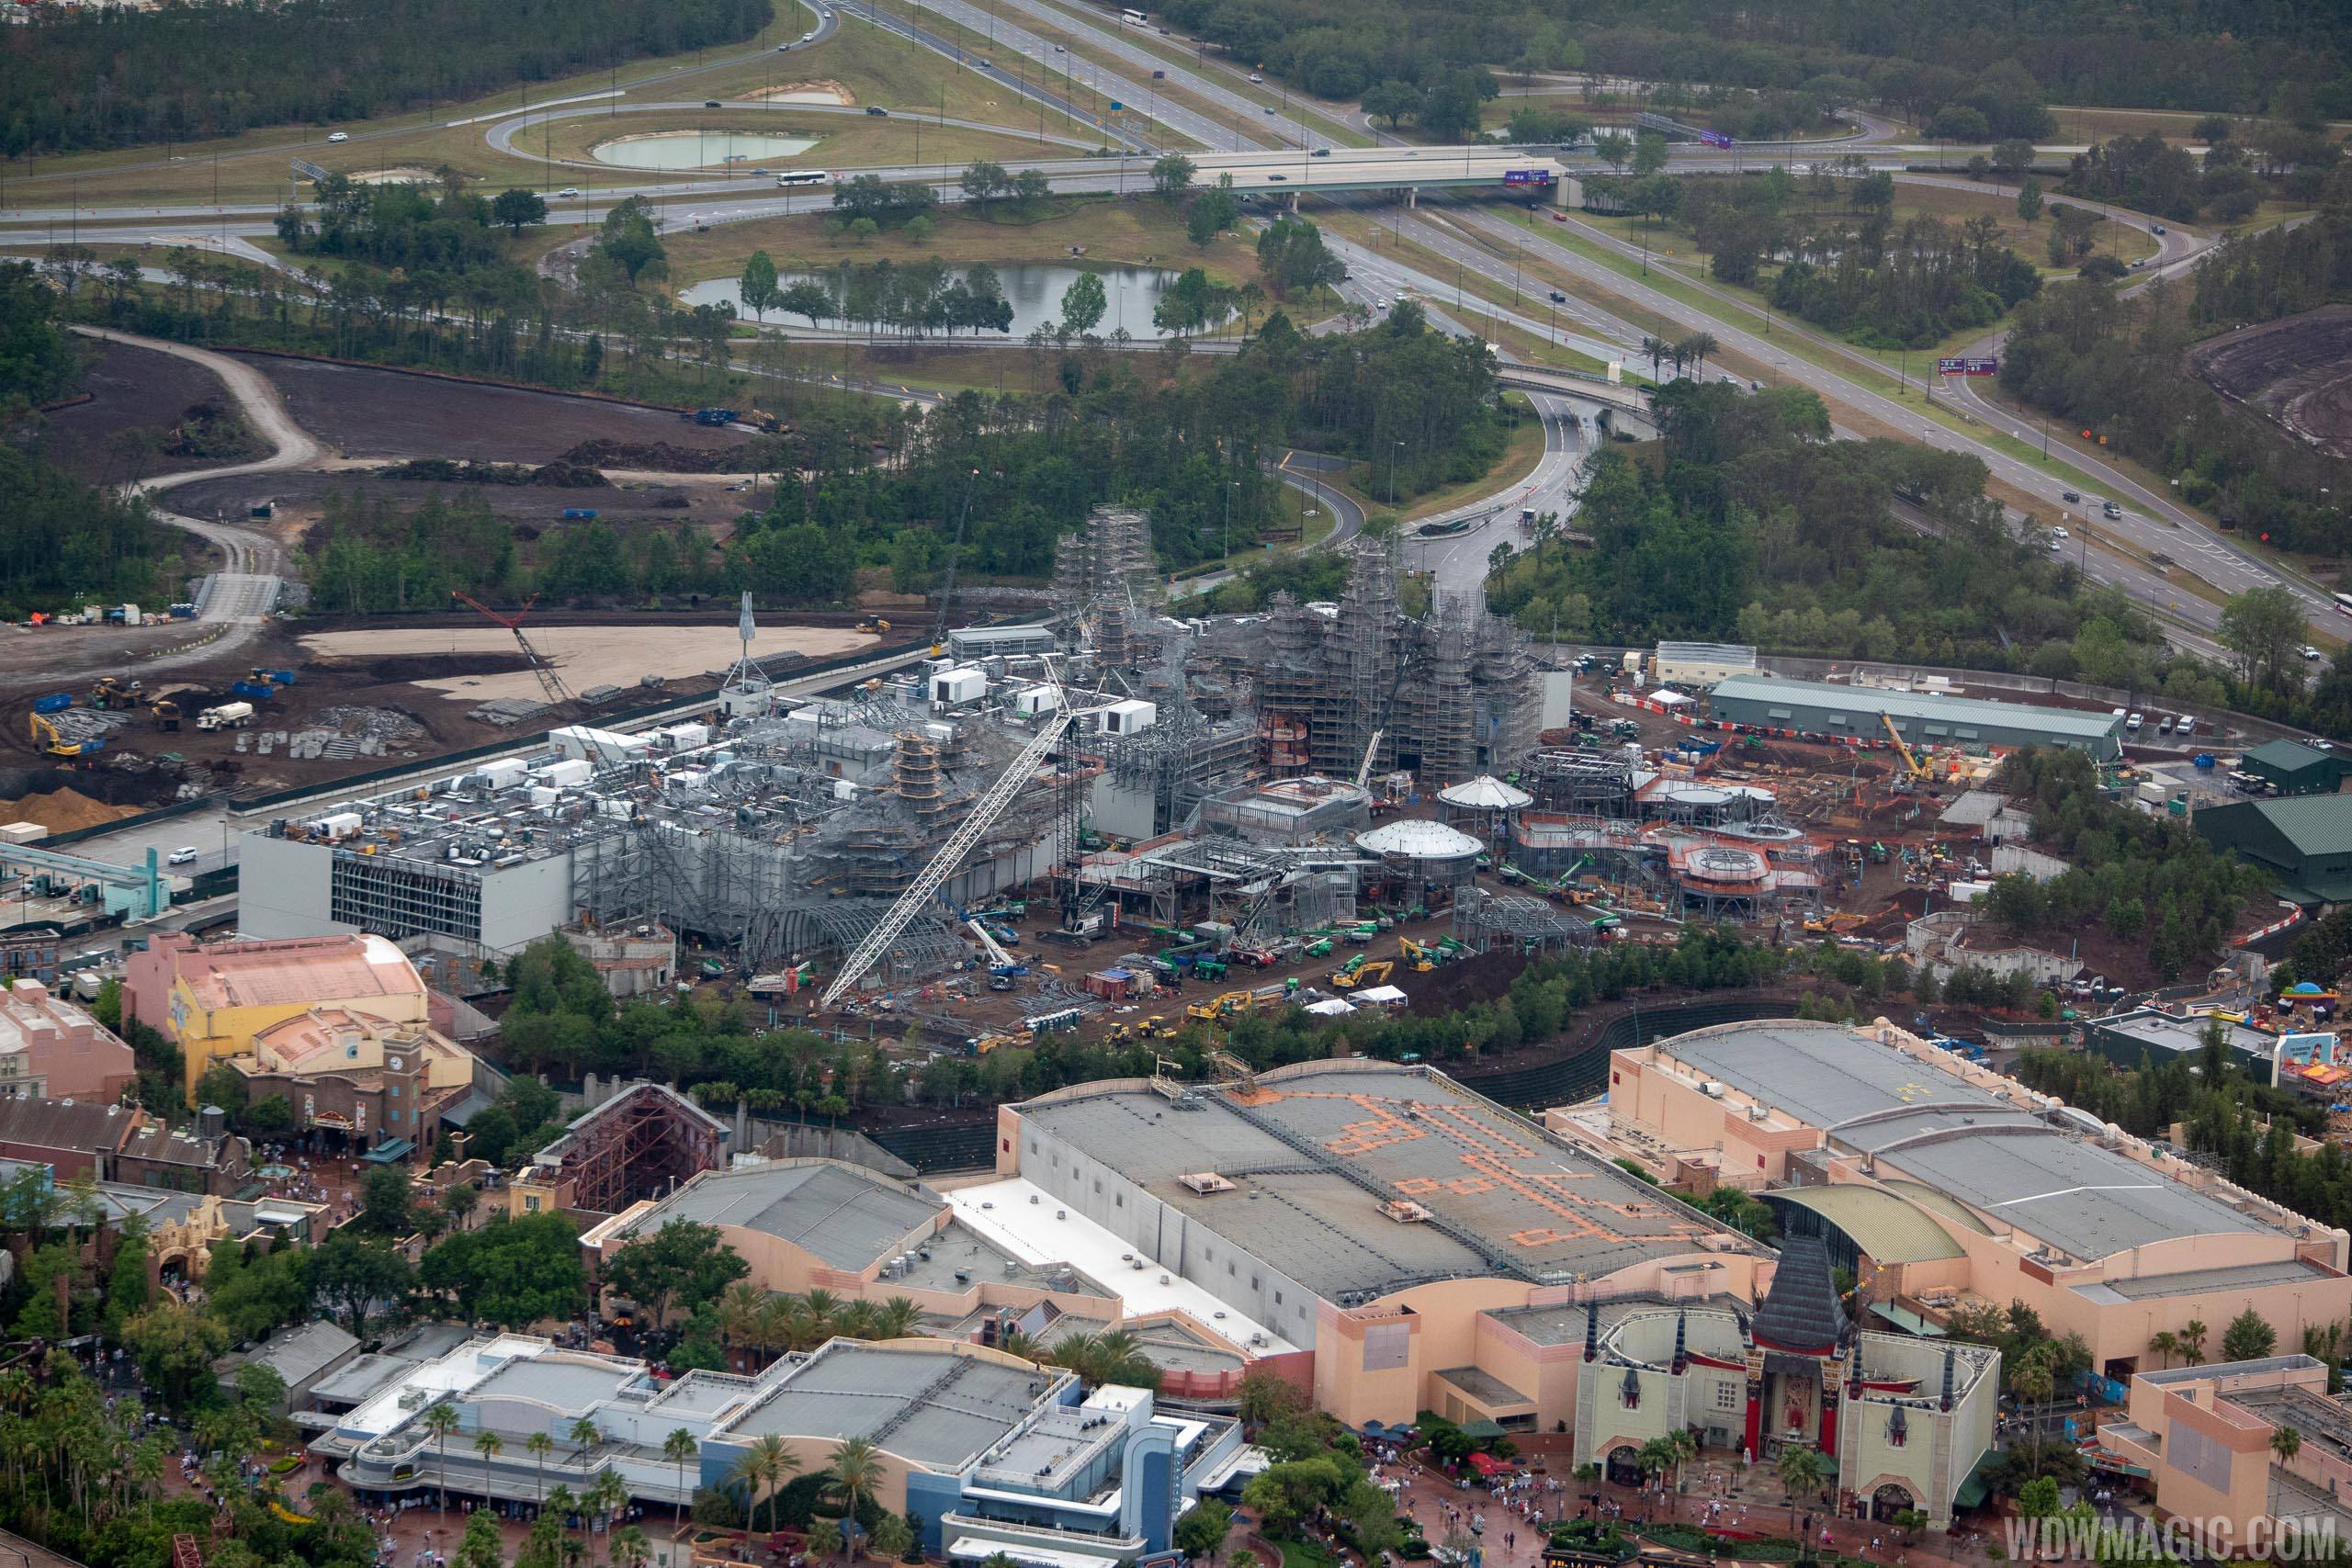 PHOTOS - Aerial views of Star Wars Galaxy's Edge construction at Disney's Hollywood Studios